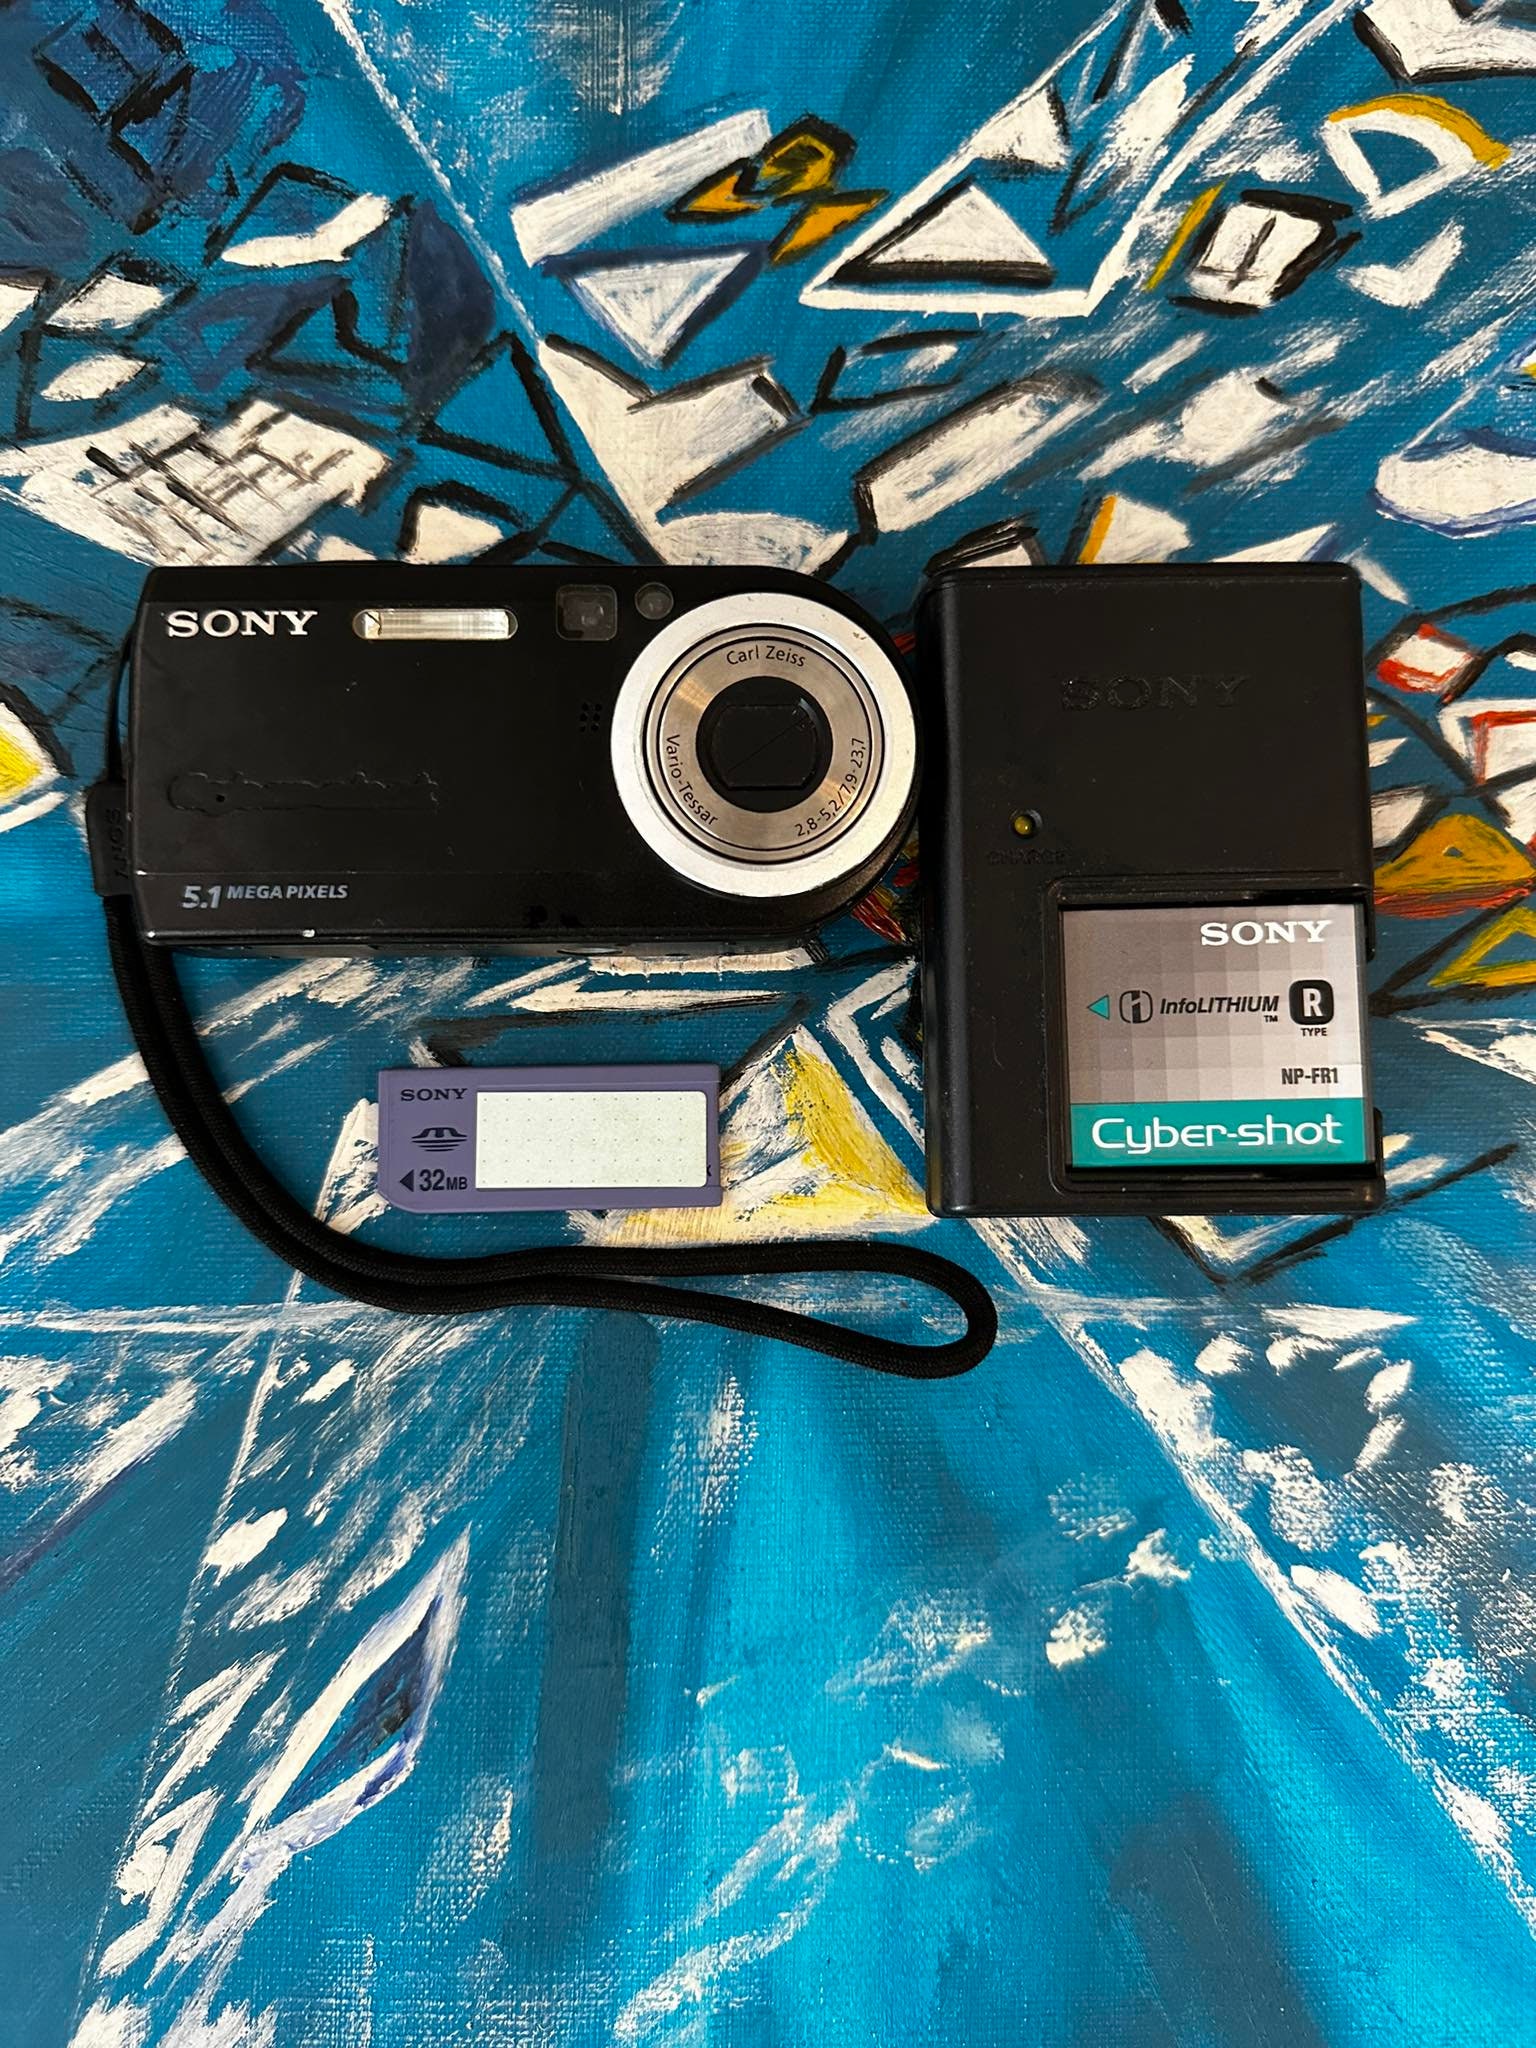 Sony Cyber shot DSC P Compact Digital Camera 7.2MP 3x   Etsy